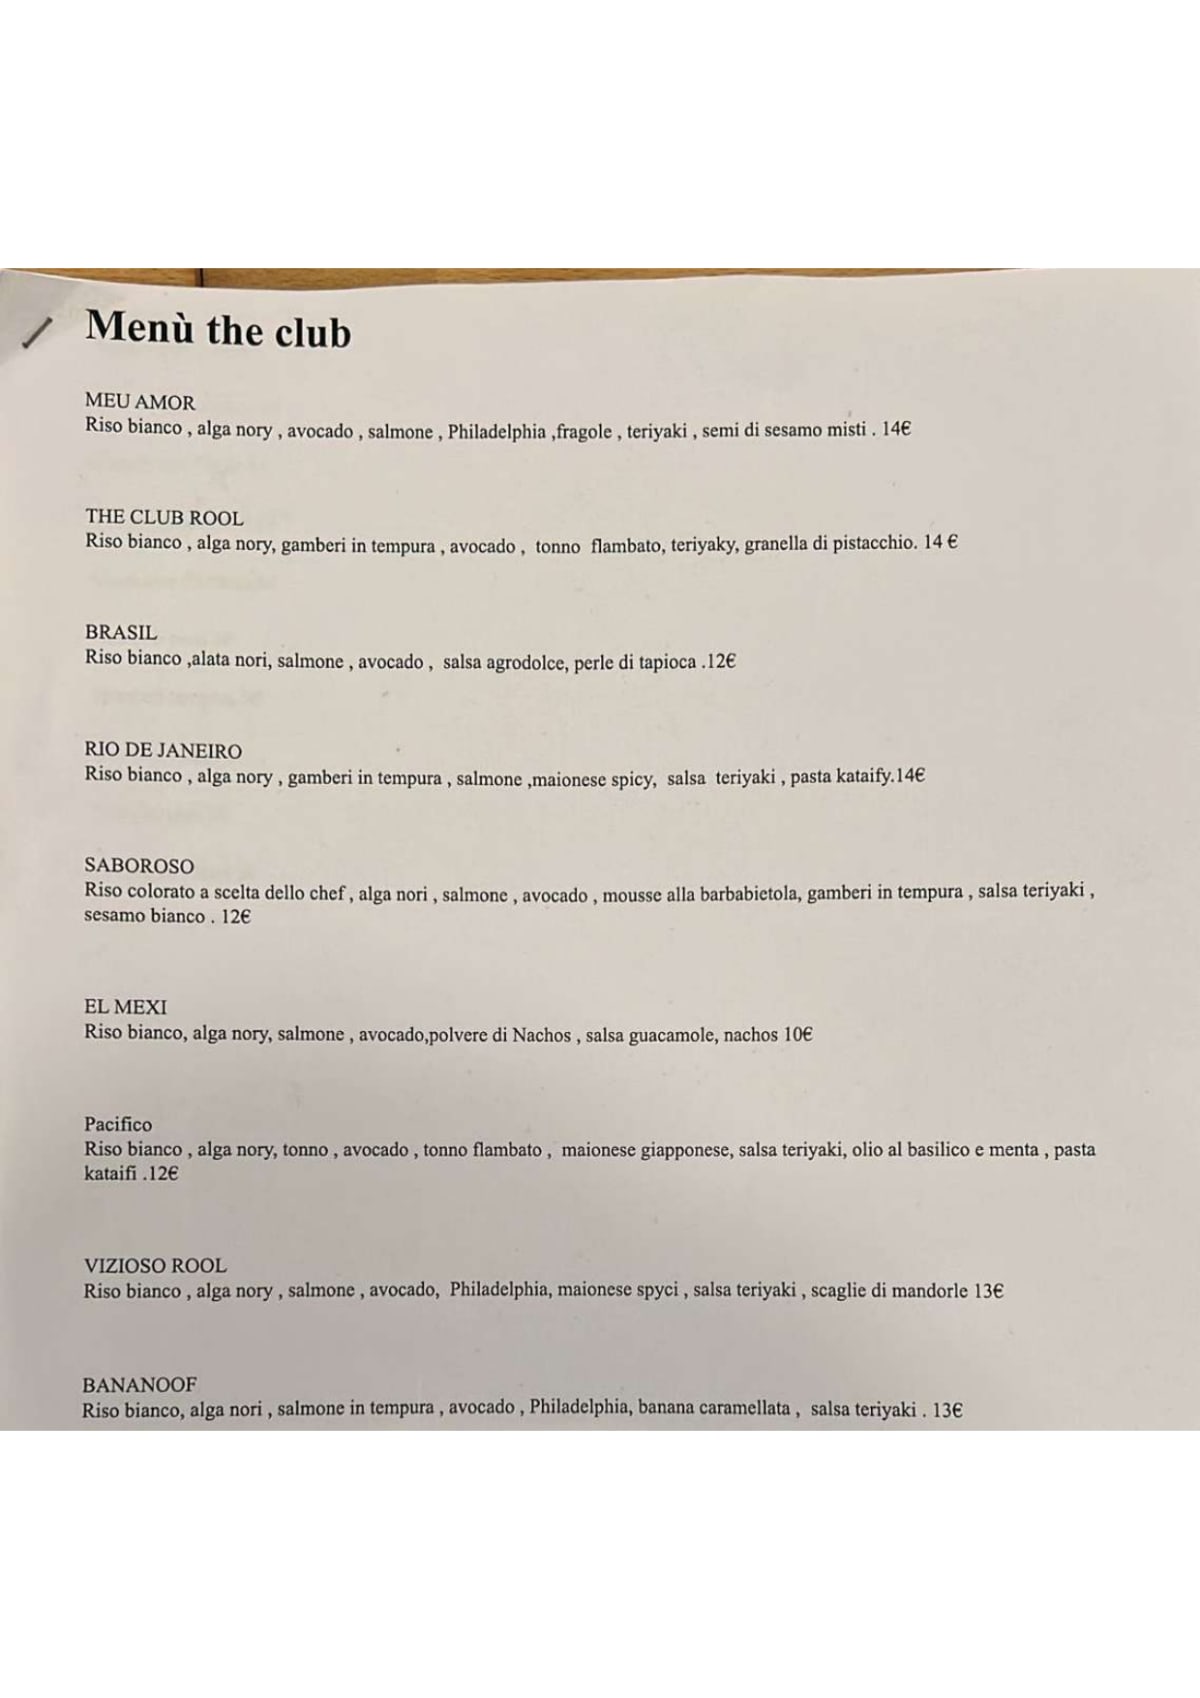 The Club Sushi menu